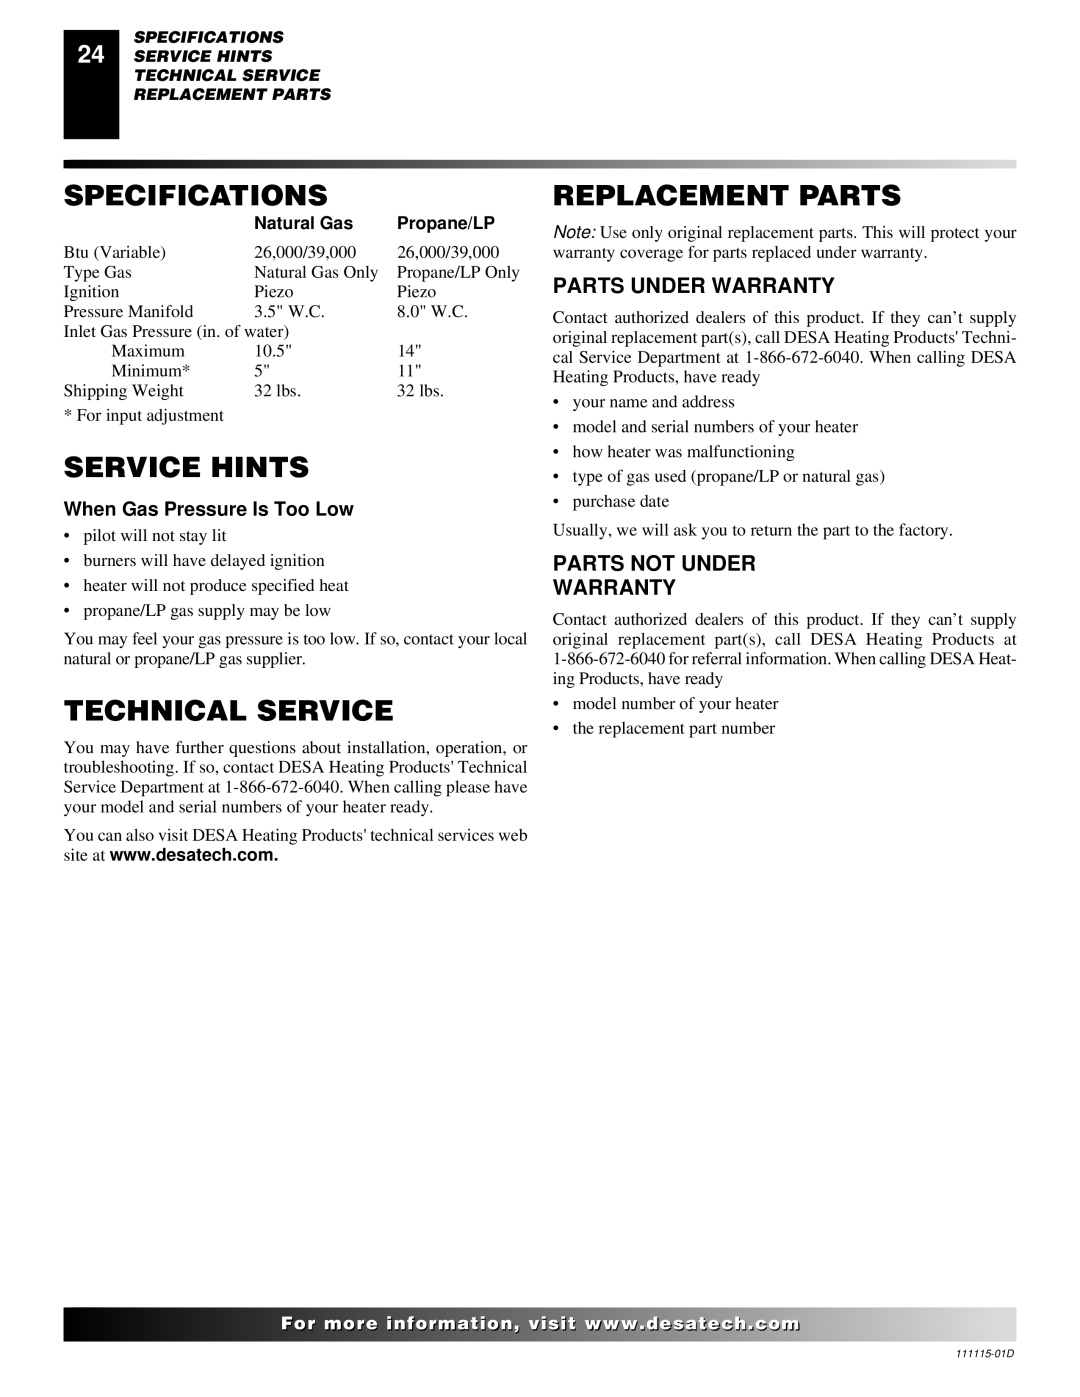 Desa VML27PR installation manual Specifications, Service Hints, Technical Service Replacement Parts, Parts Under Warranty 